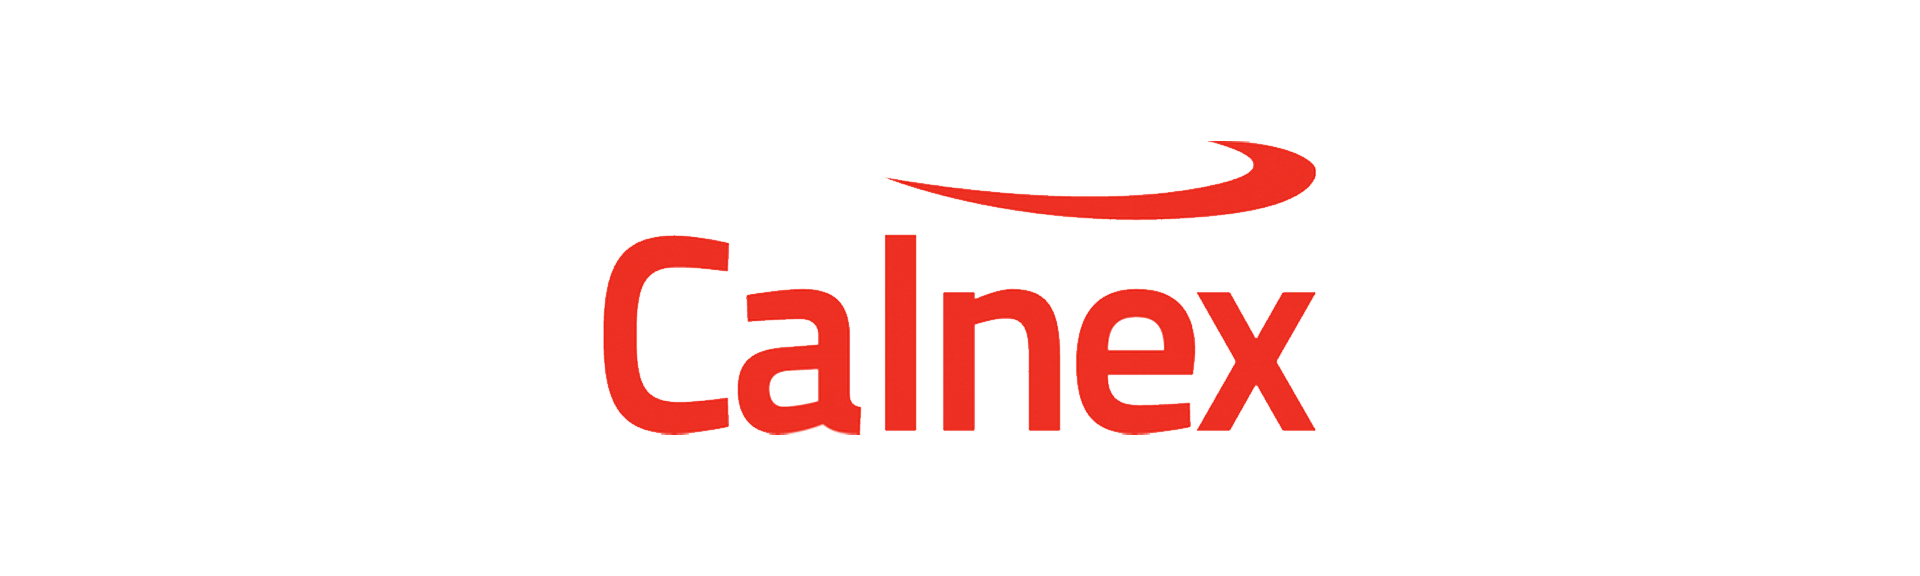 Calnex